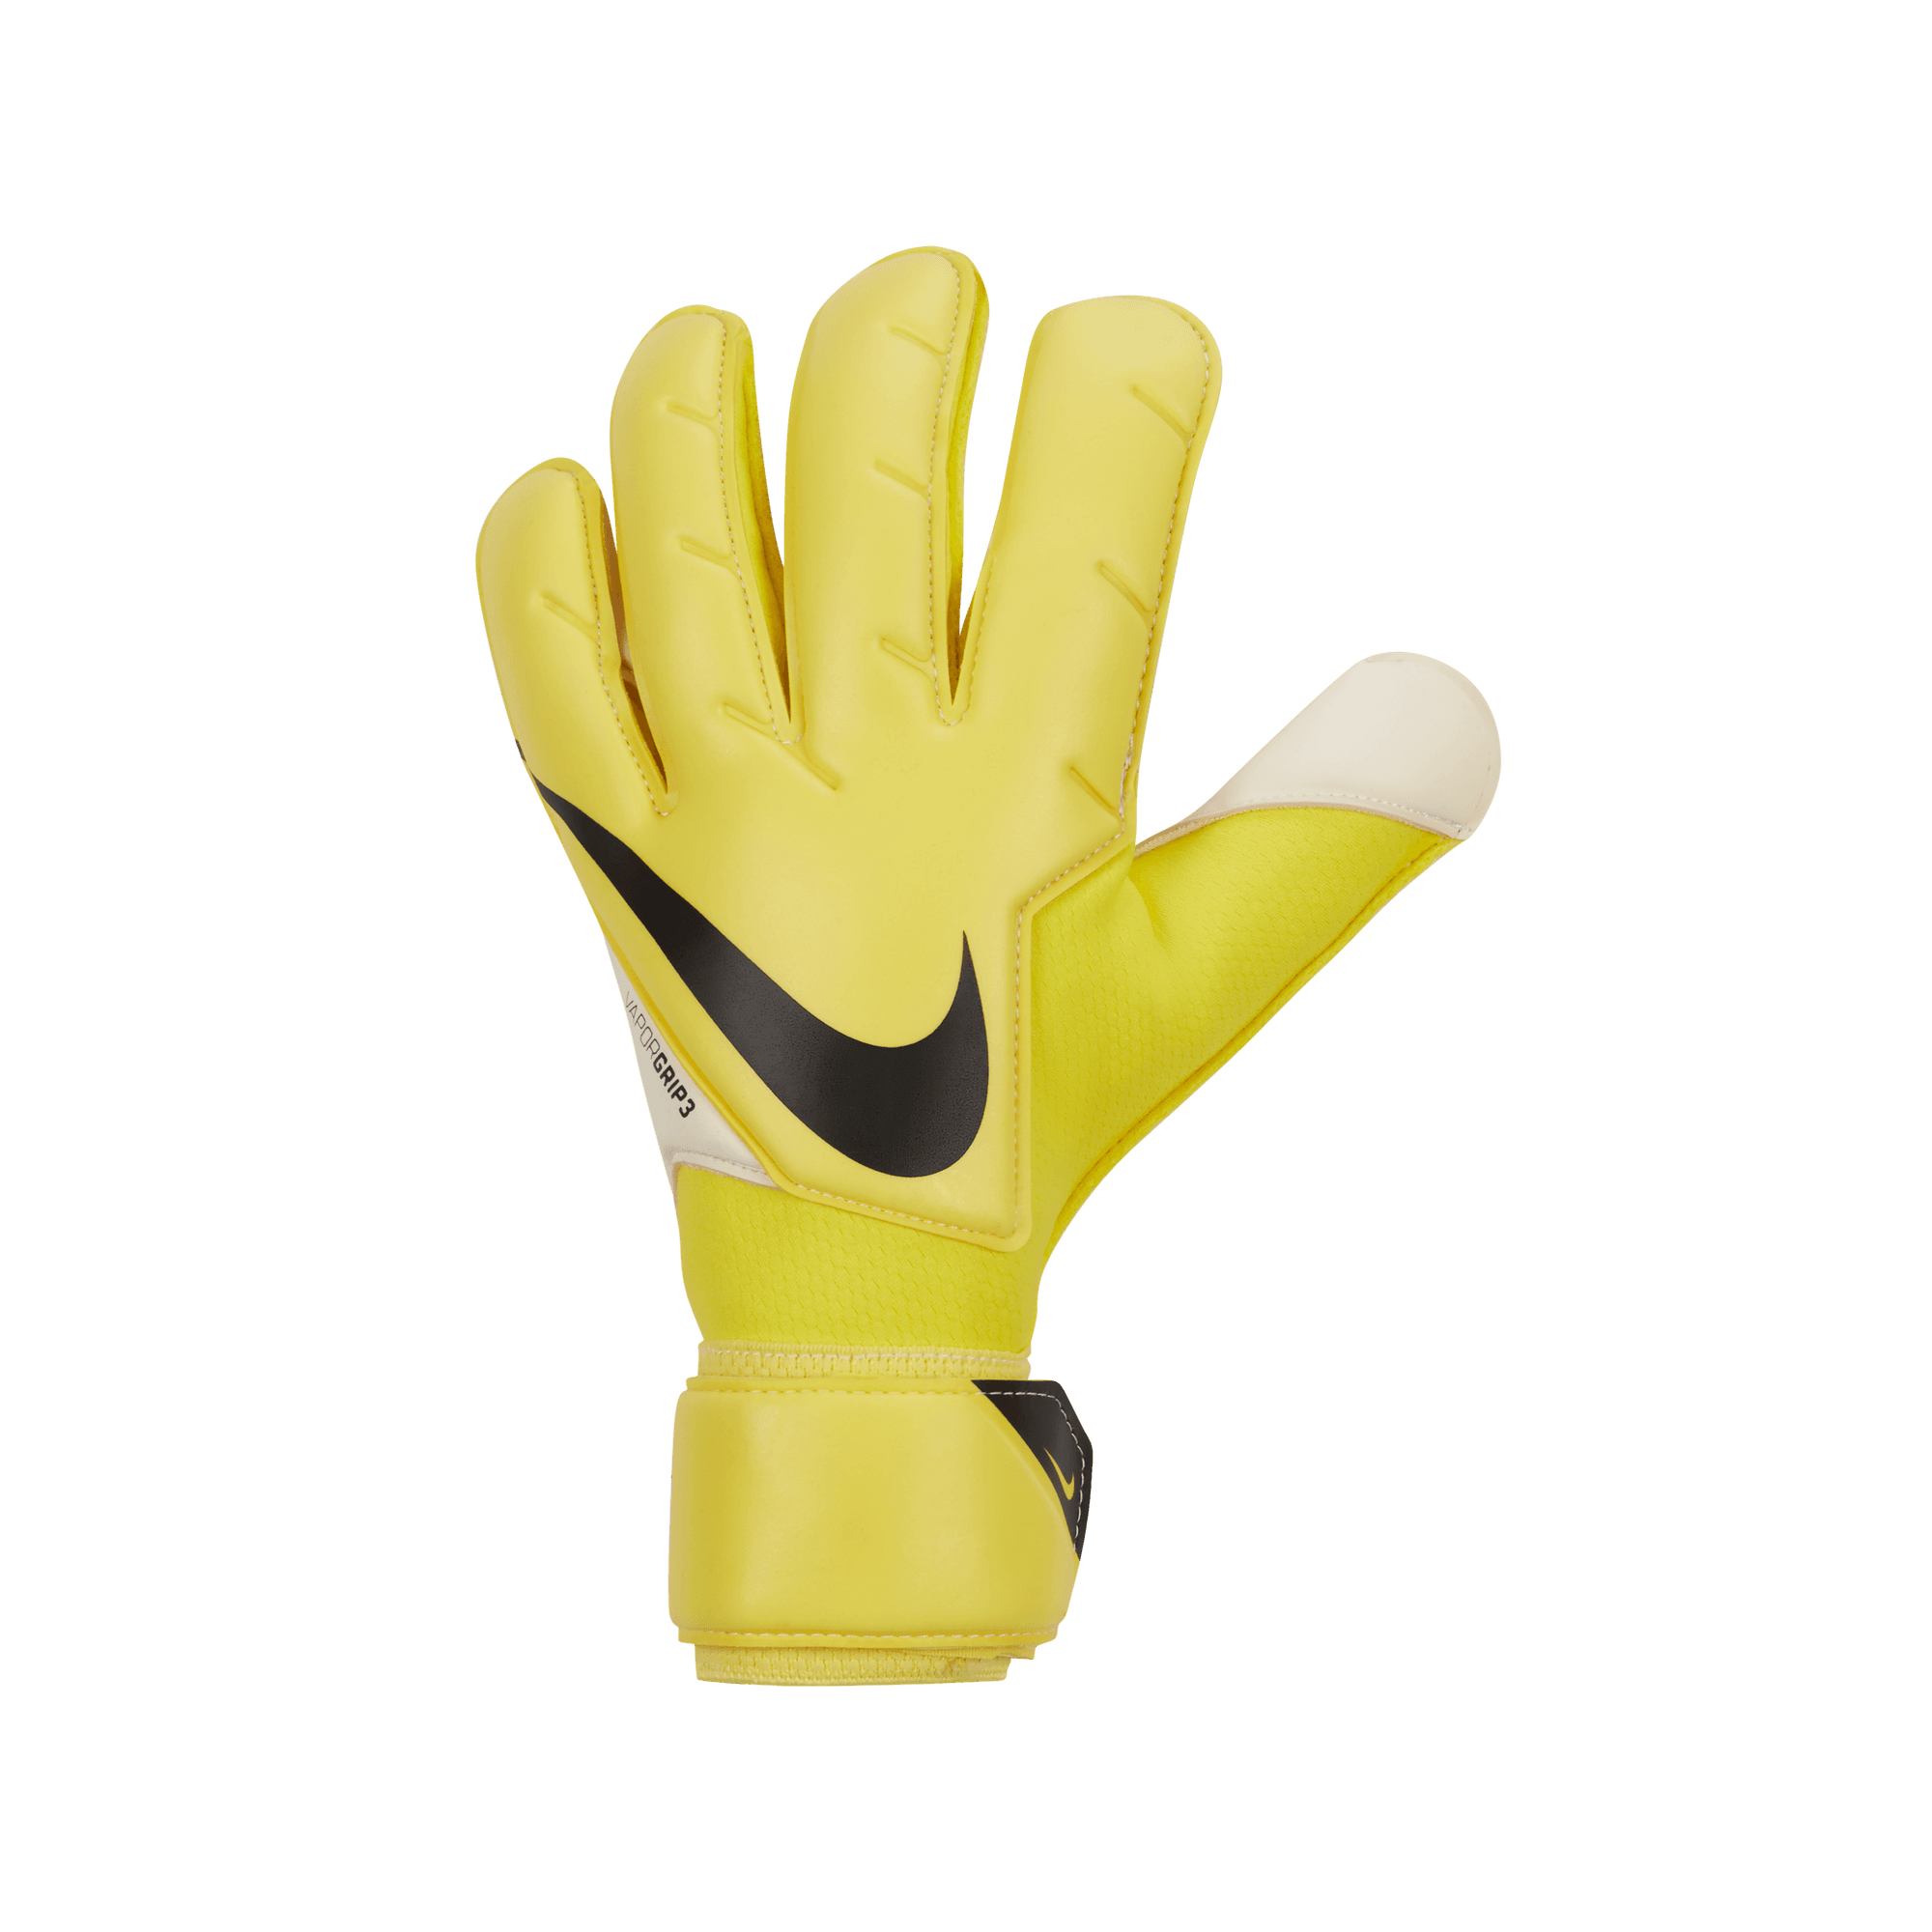 Fuera Discriminación sexual Demostrar stefanssoccer.com:Nike Vapor Grip3 Goalkeeper Gloves - Yellow / Black